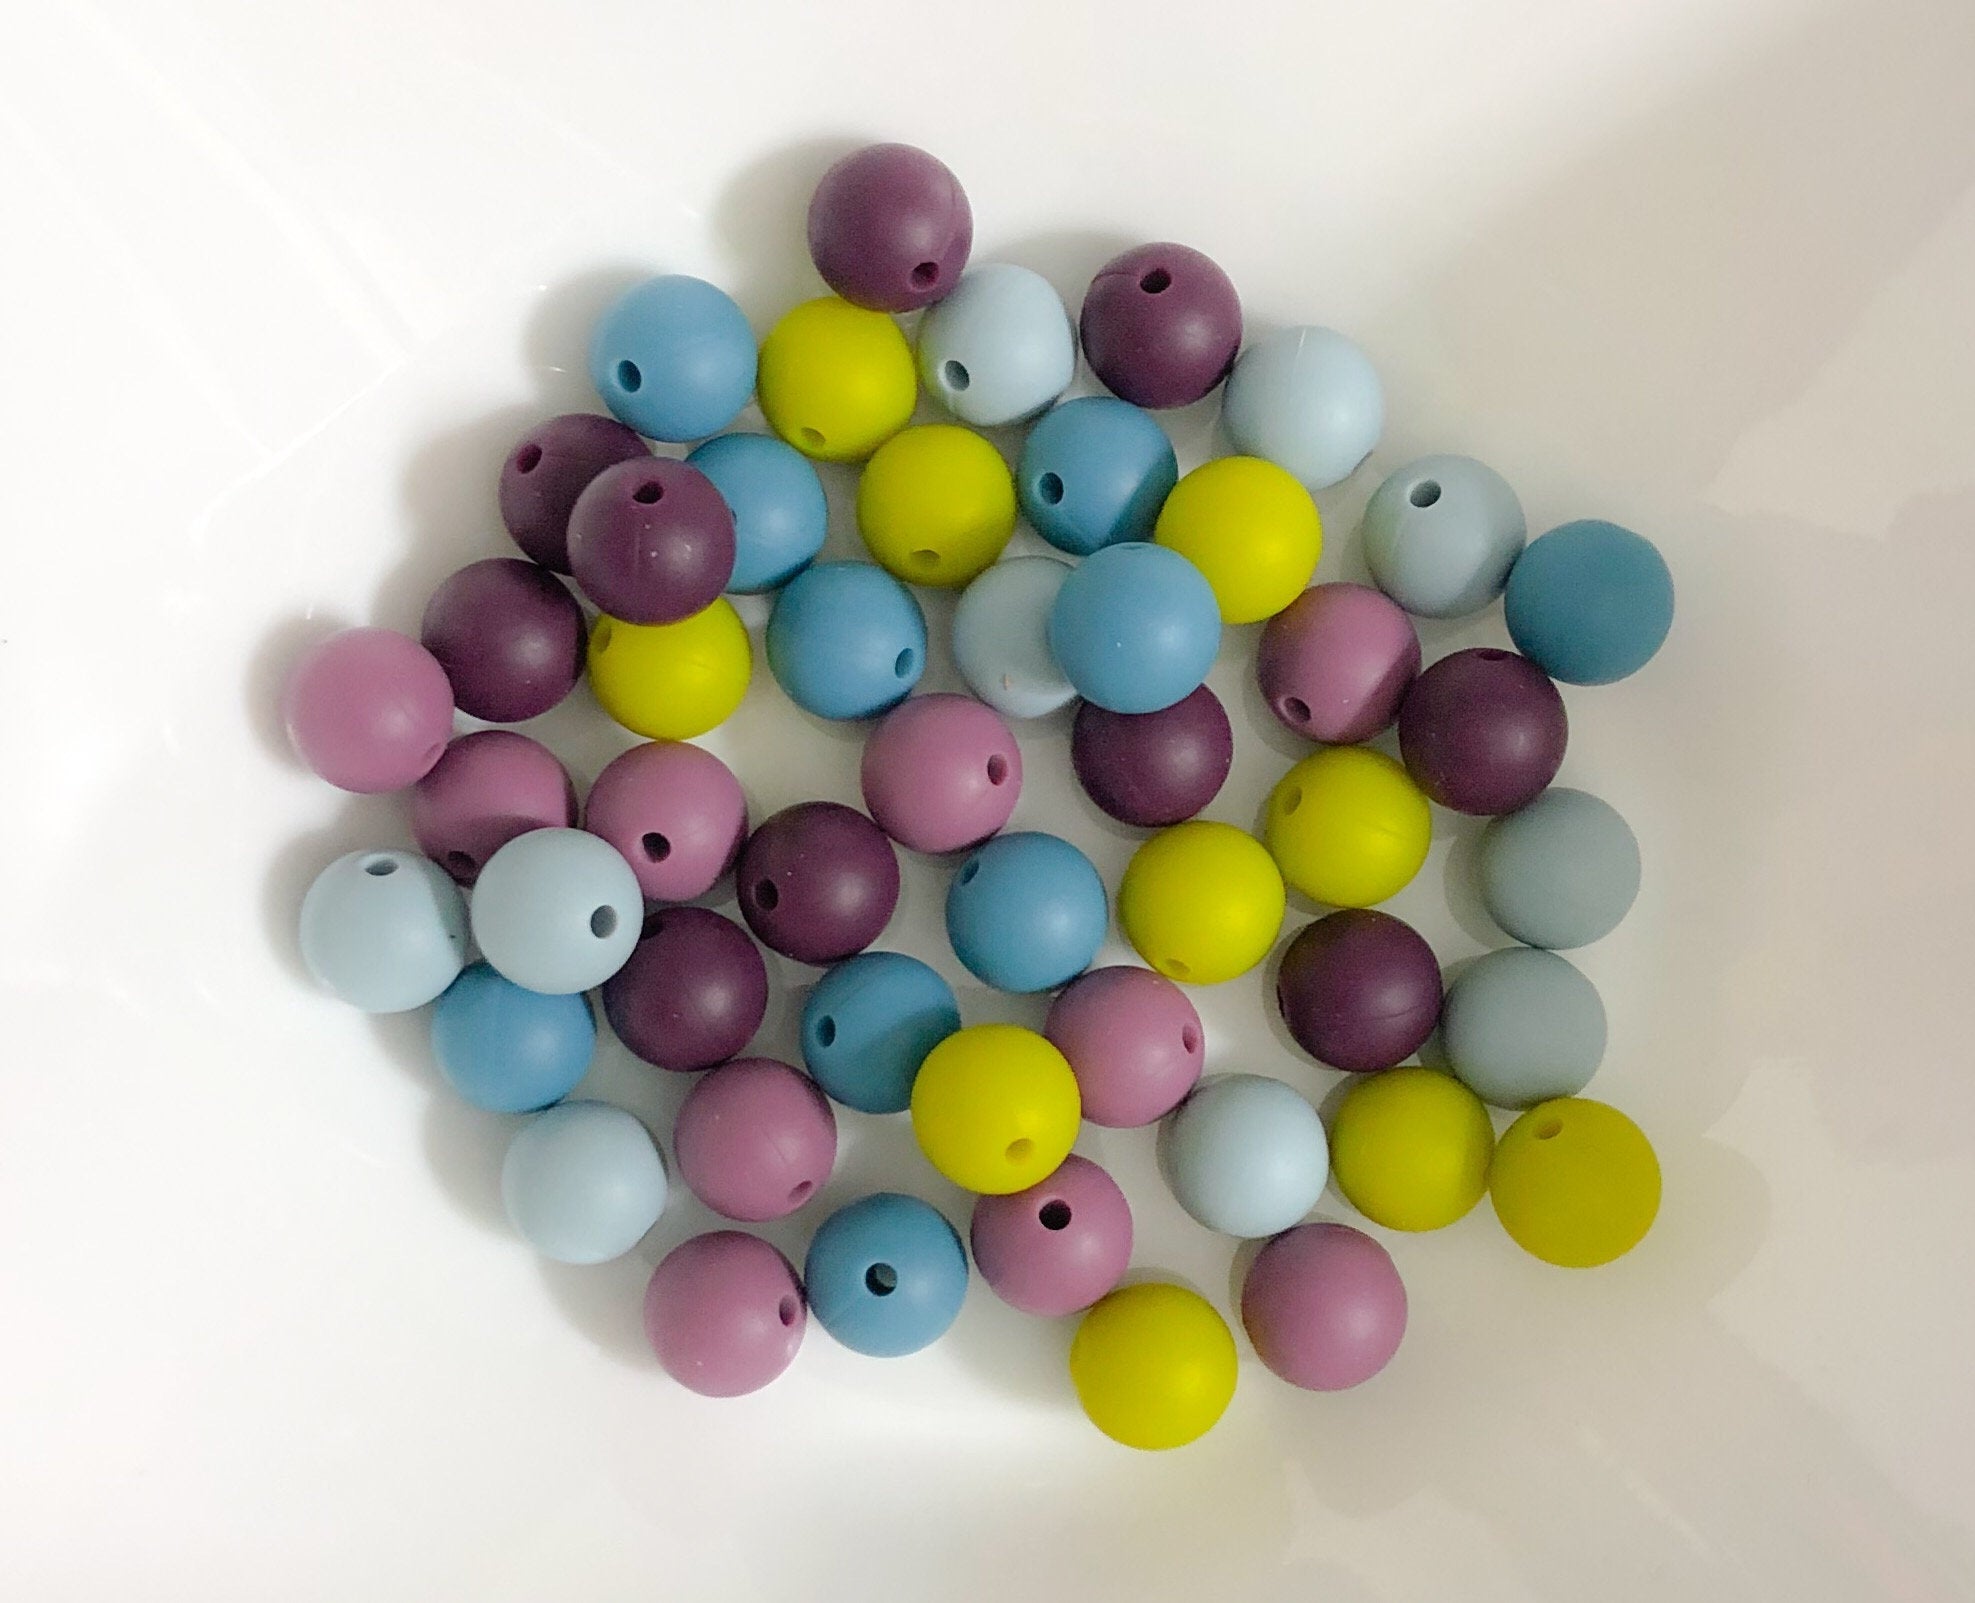 50 Bulk Silicone Beads - Blackberry Macaroon - Violet, Nectar, Bluebird, Wedgewood, Moss